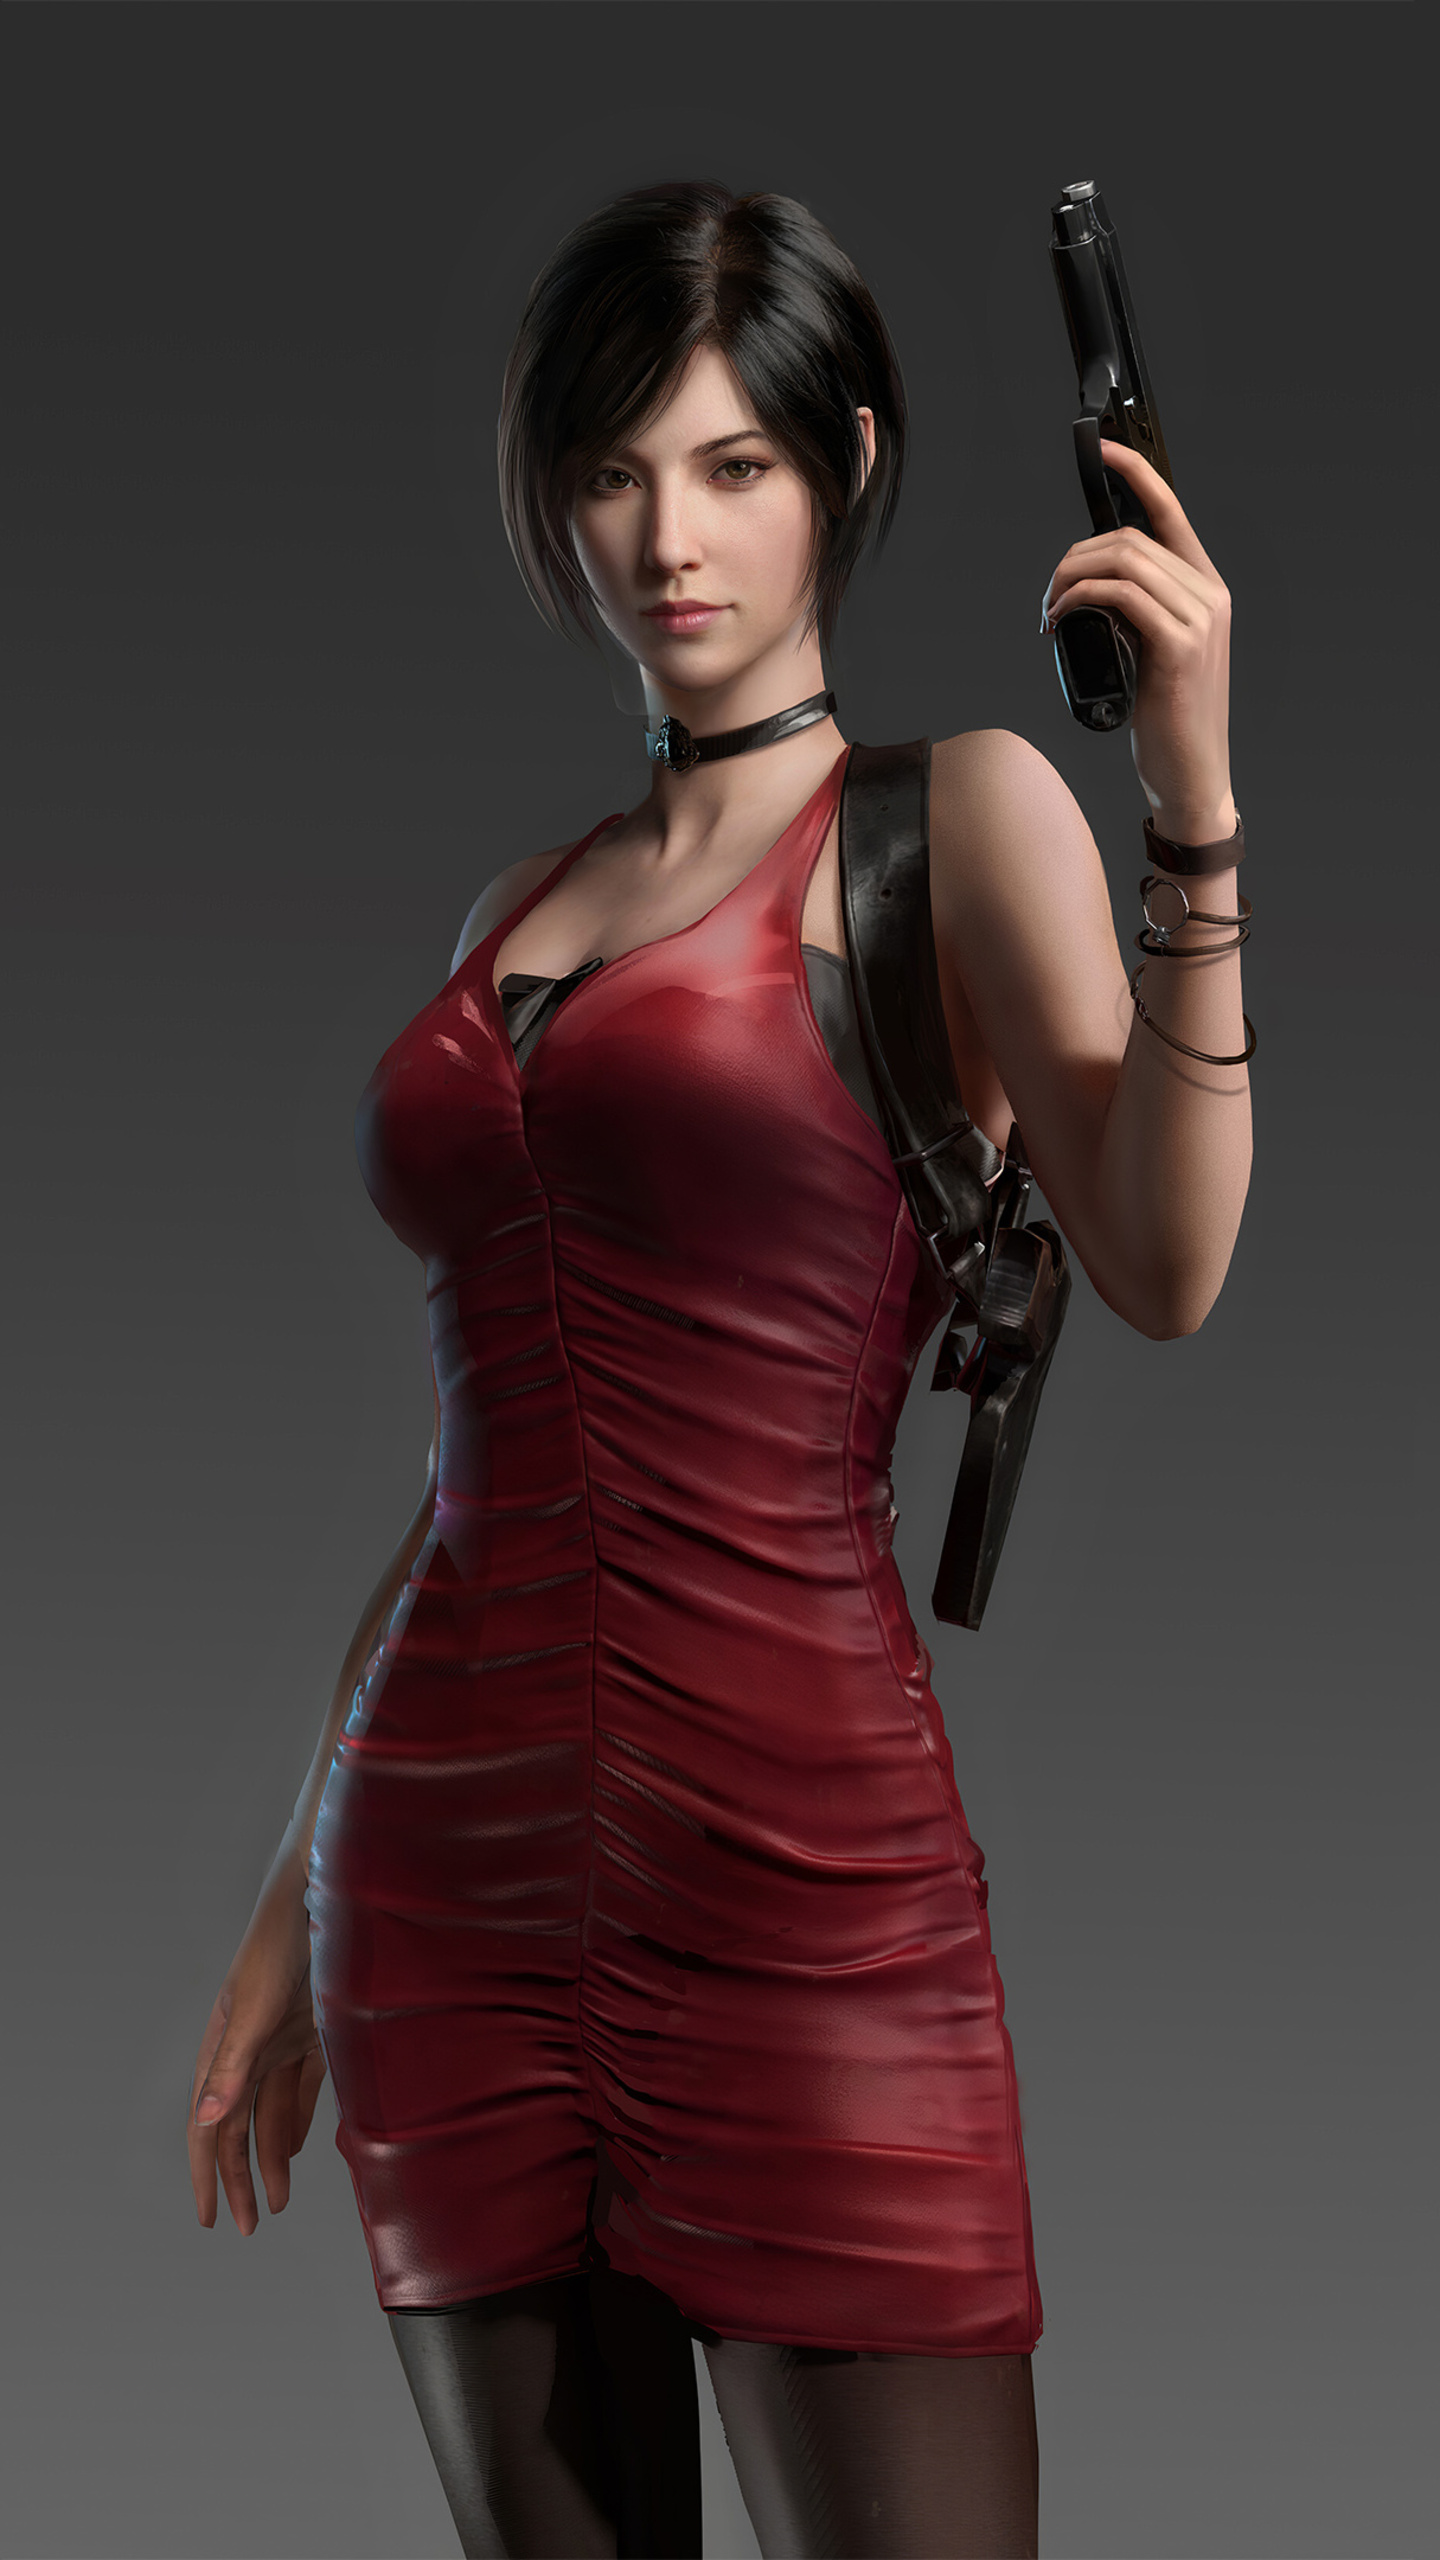 Download 1125x2436 Resident Evil 2, Ada Wong, Short Hair 